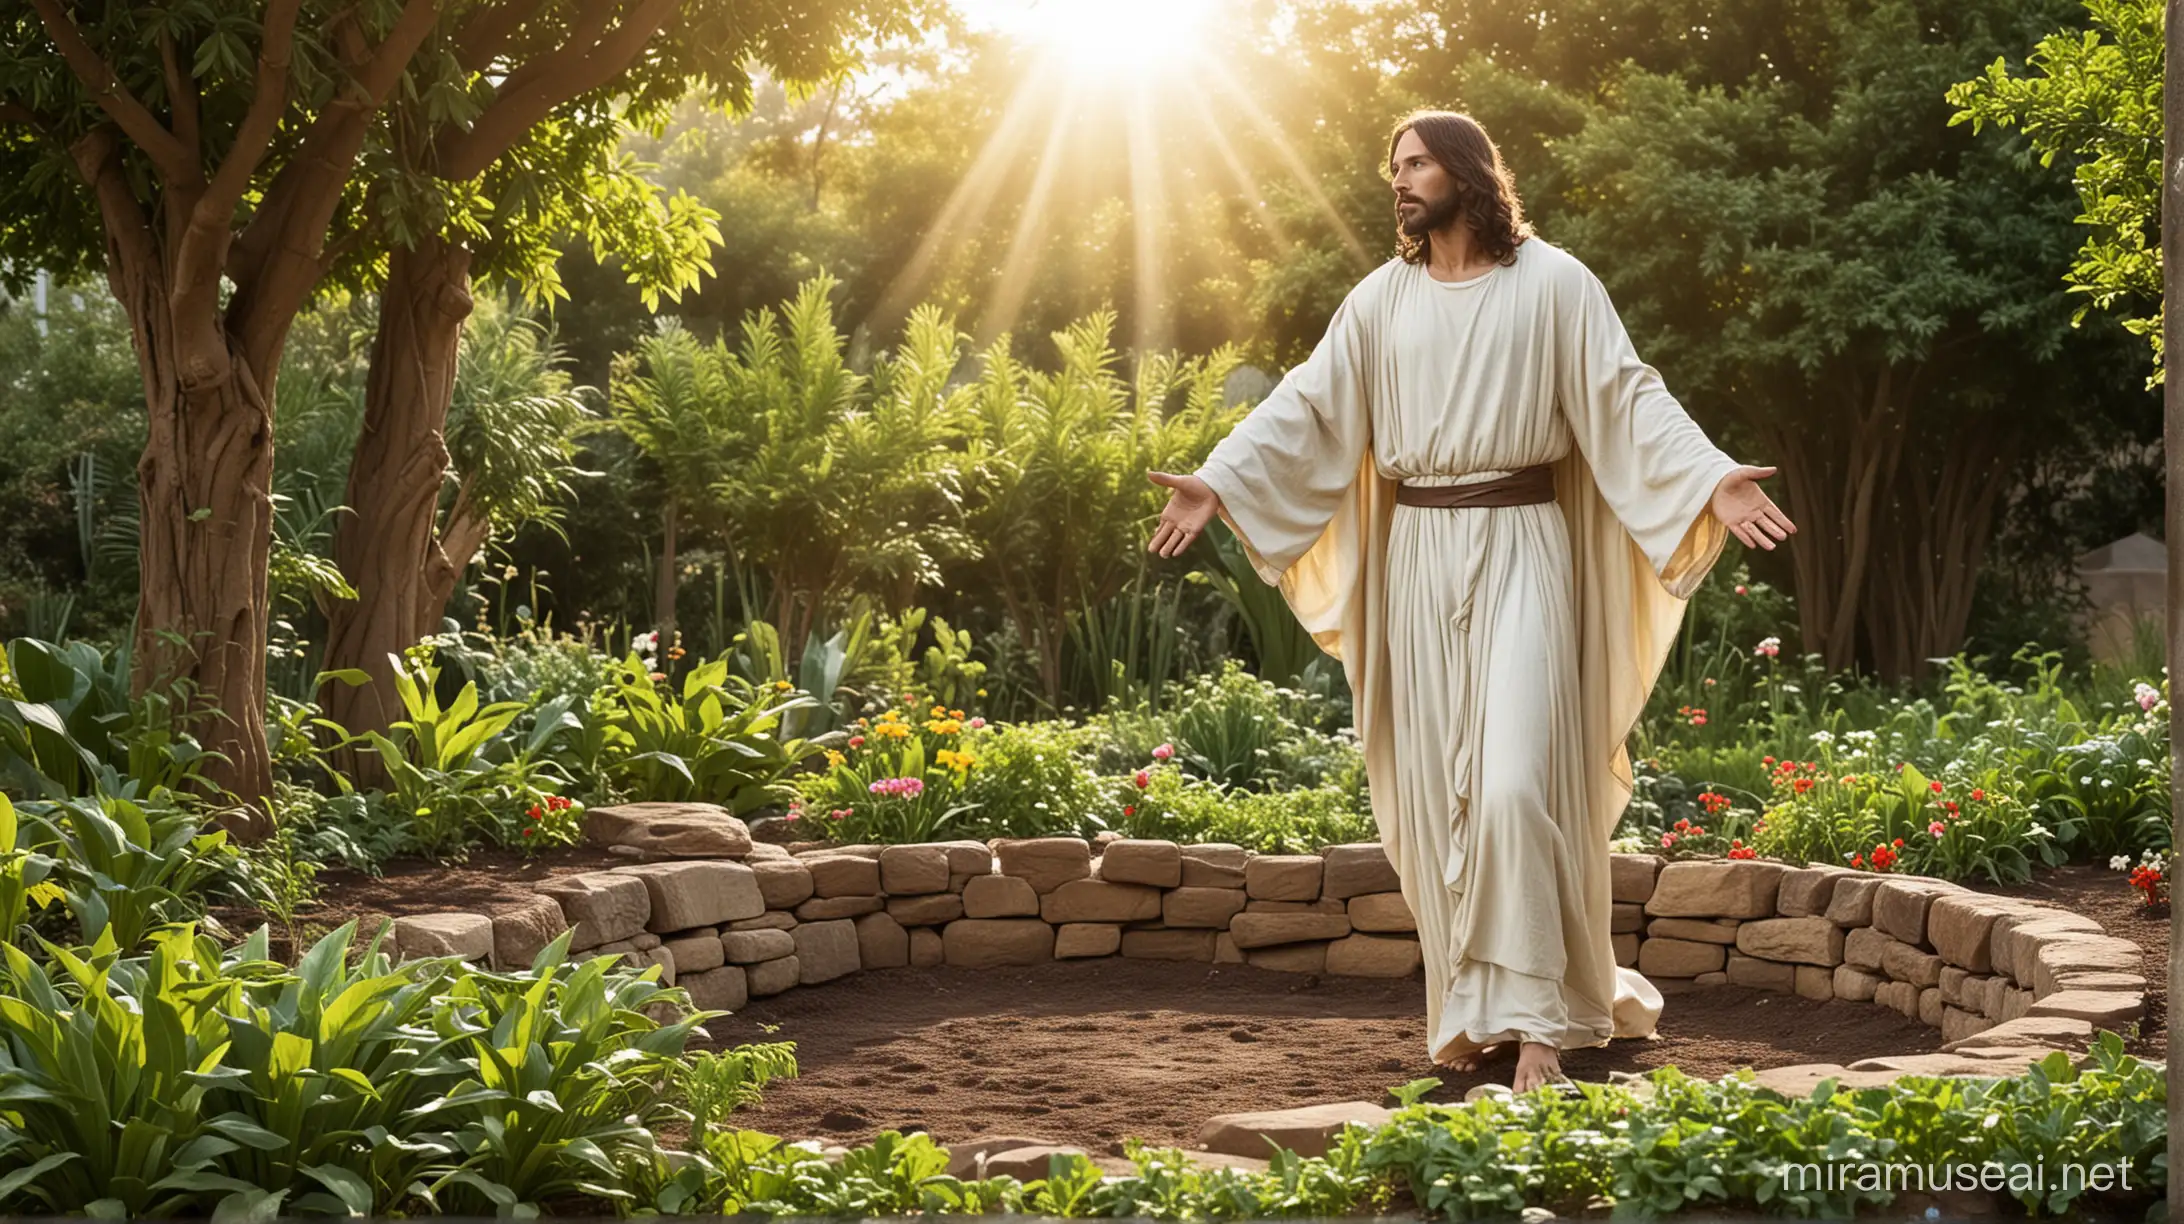 Resurrection of Jesus Christ in a Garden